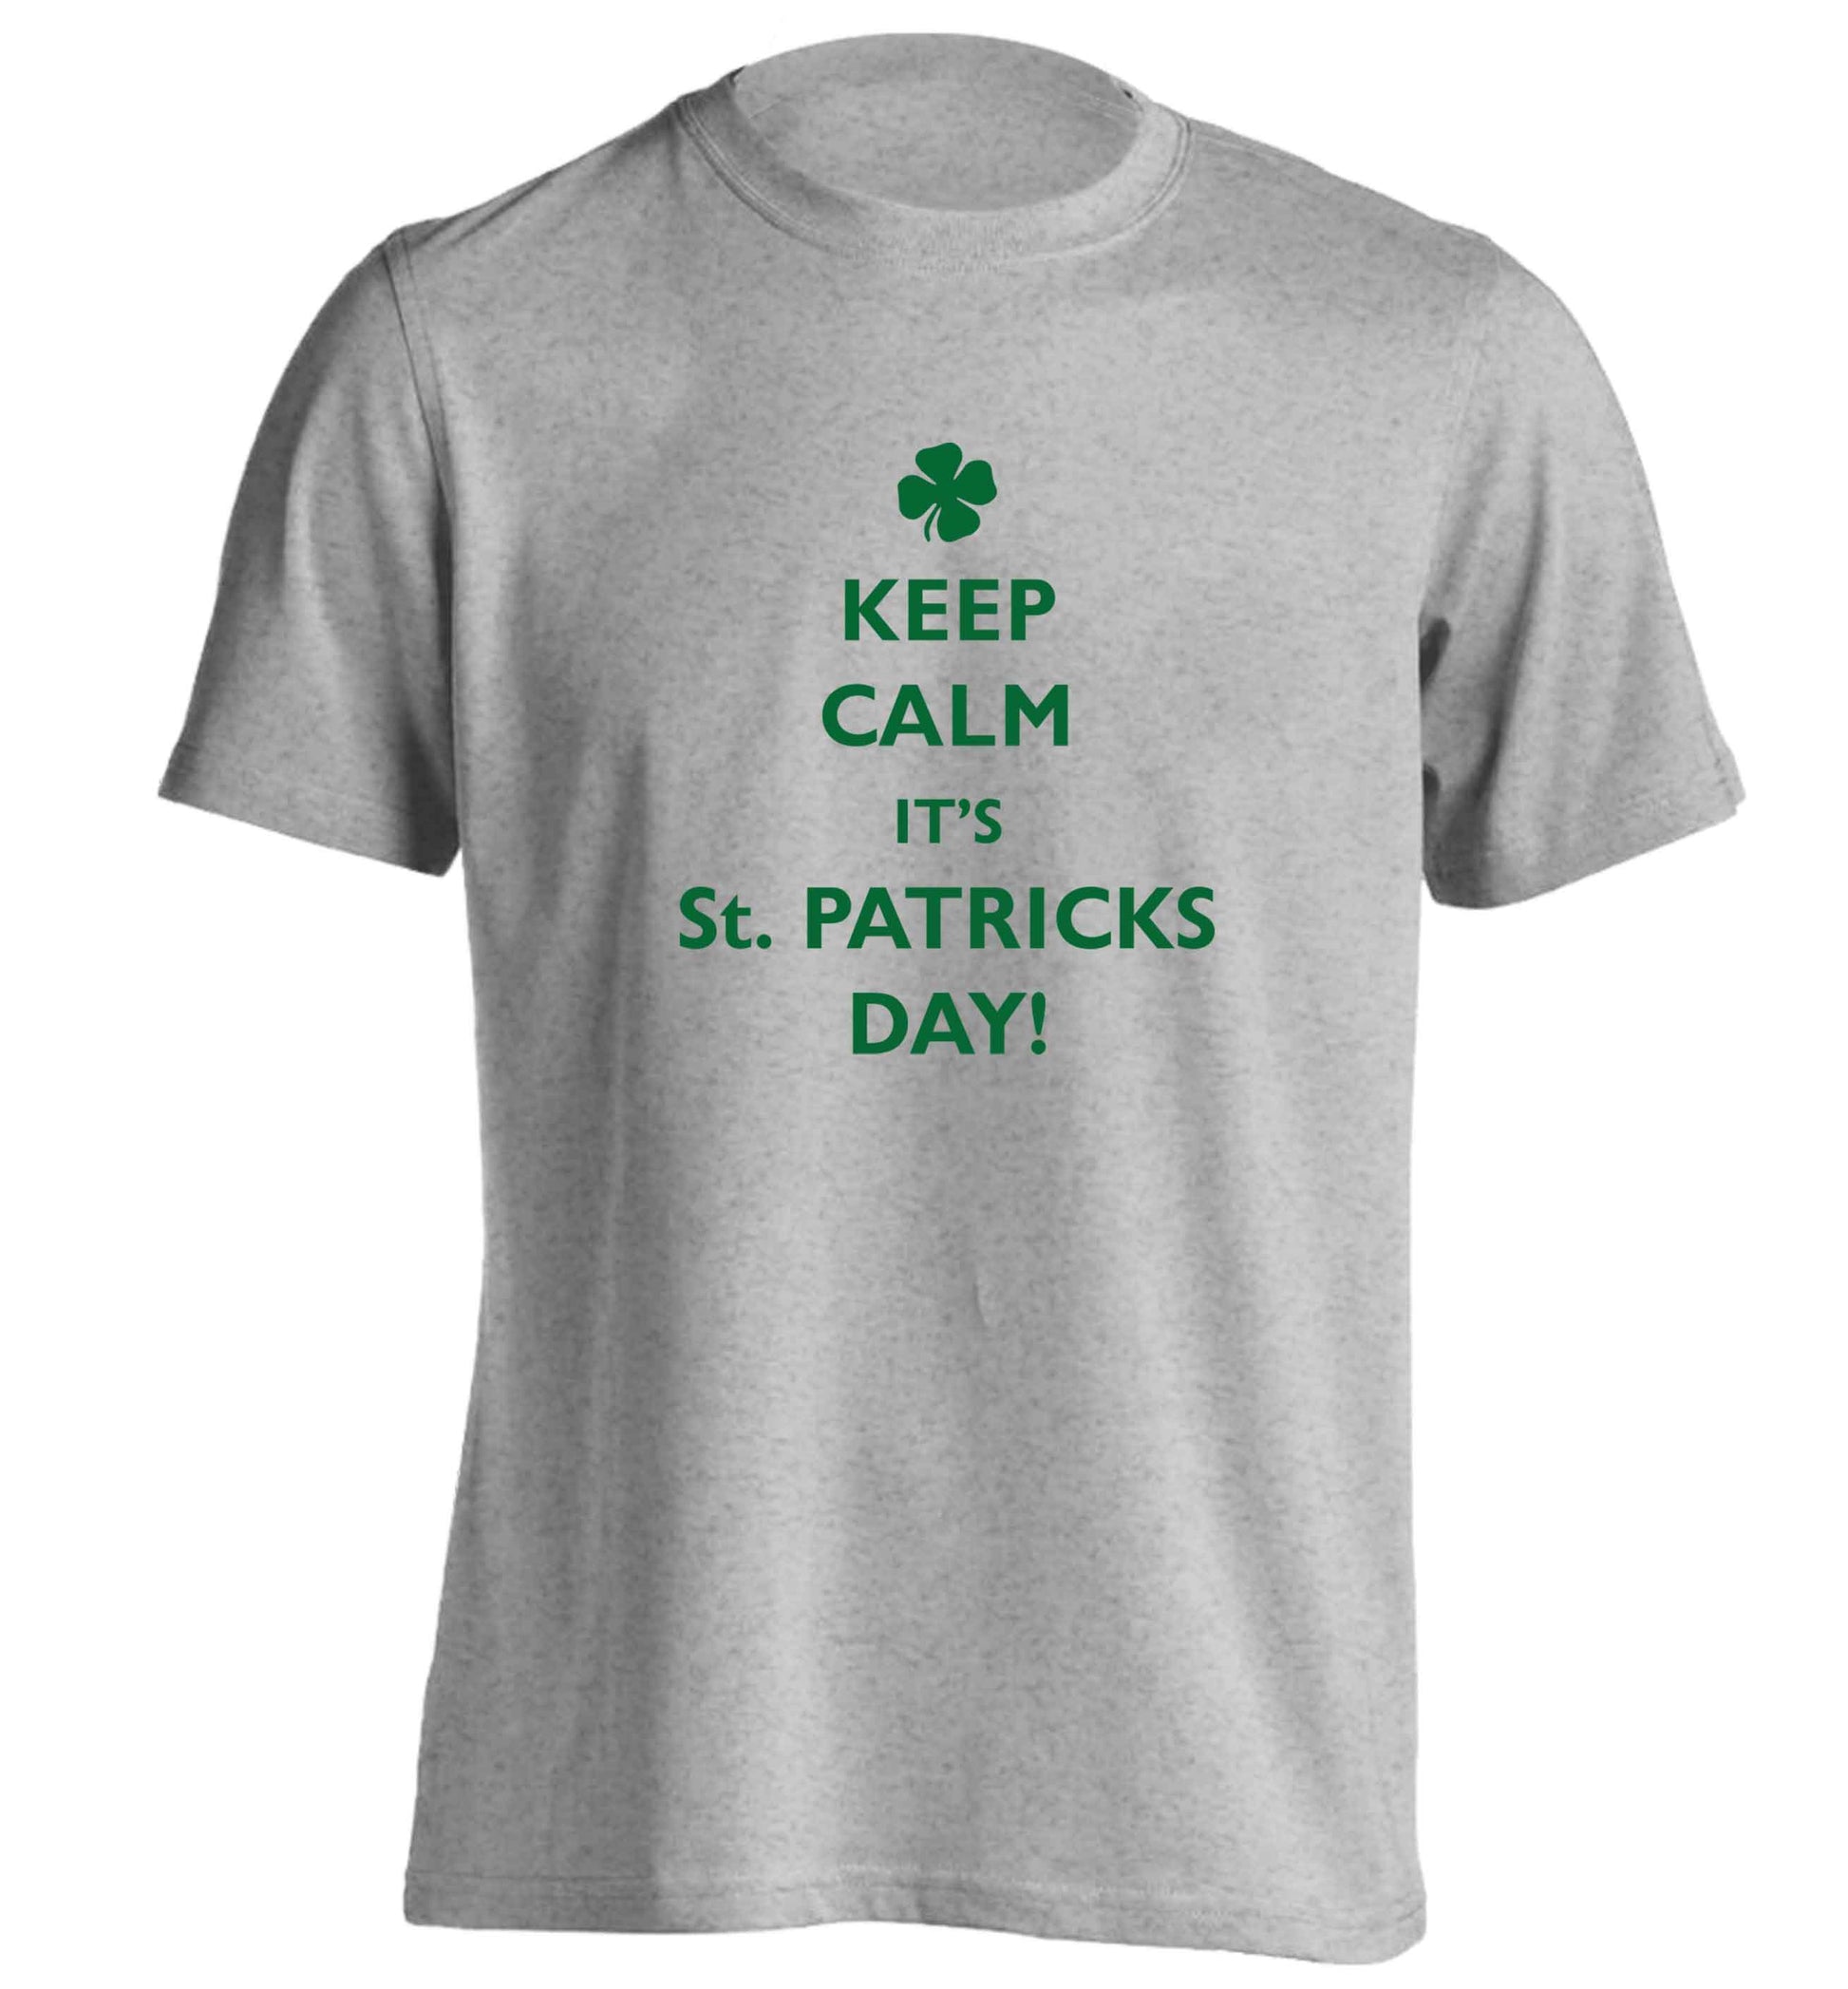 Keep calm it's St.Patricks day adults unisex grey Tshirt 2XL